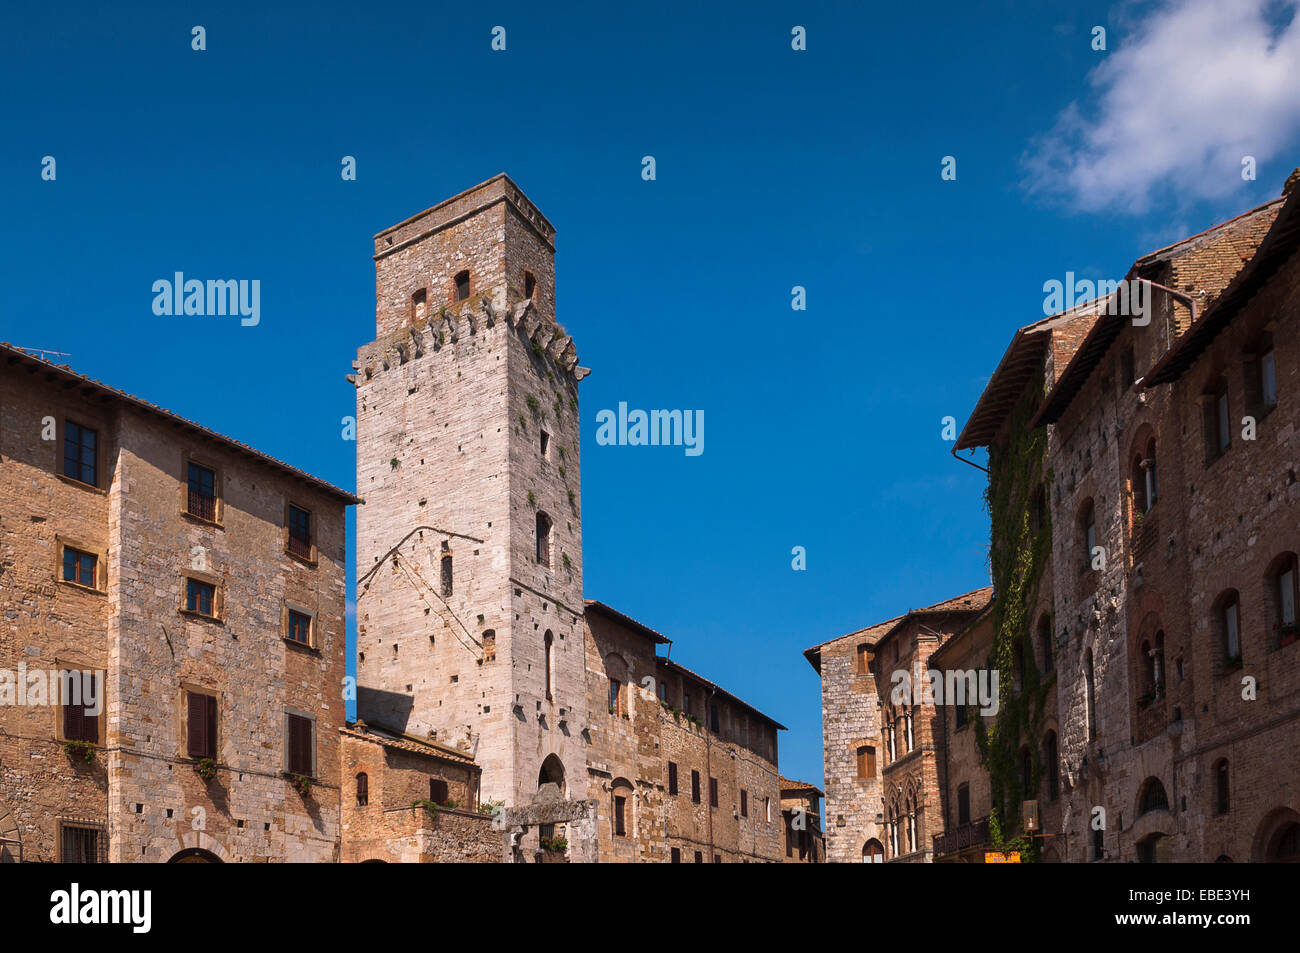 Tower and Buildings, Piazza della Cisterna, San Gimignano, Province of Siena, Tuscany, Italy Stock Photo